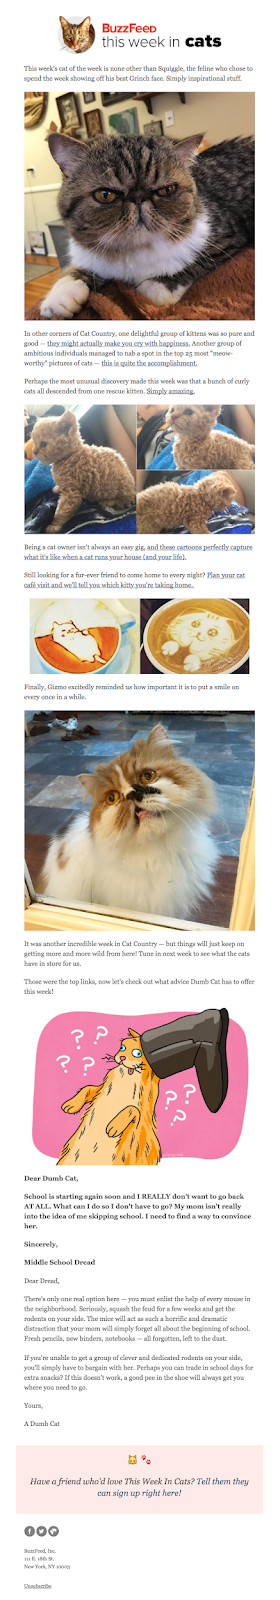 Buzzfeed - Cat Email Marketing